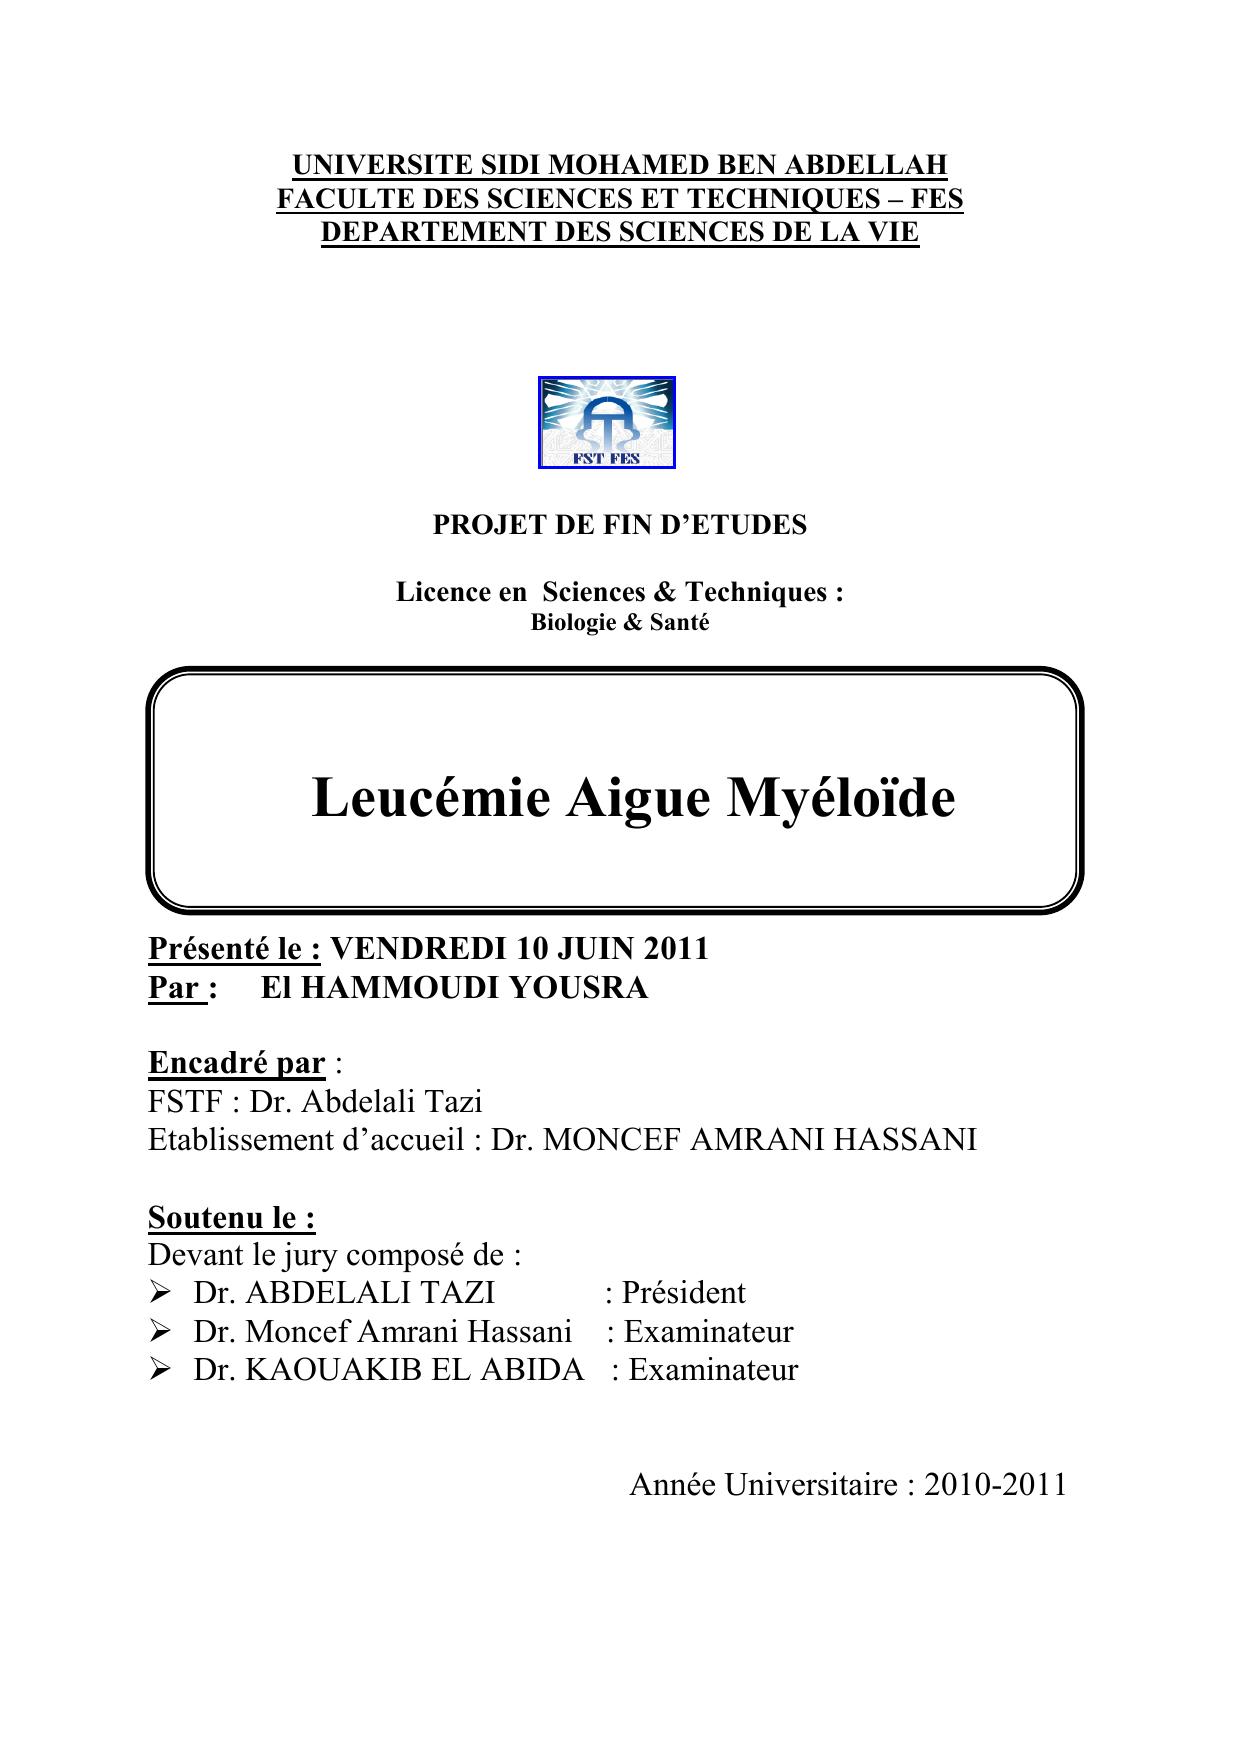 Leucémie Aigue Myéloïde